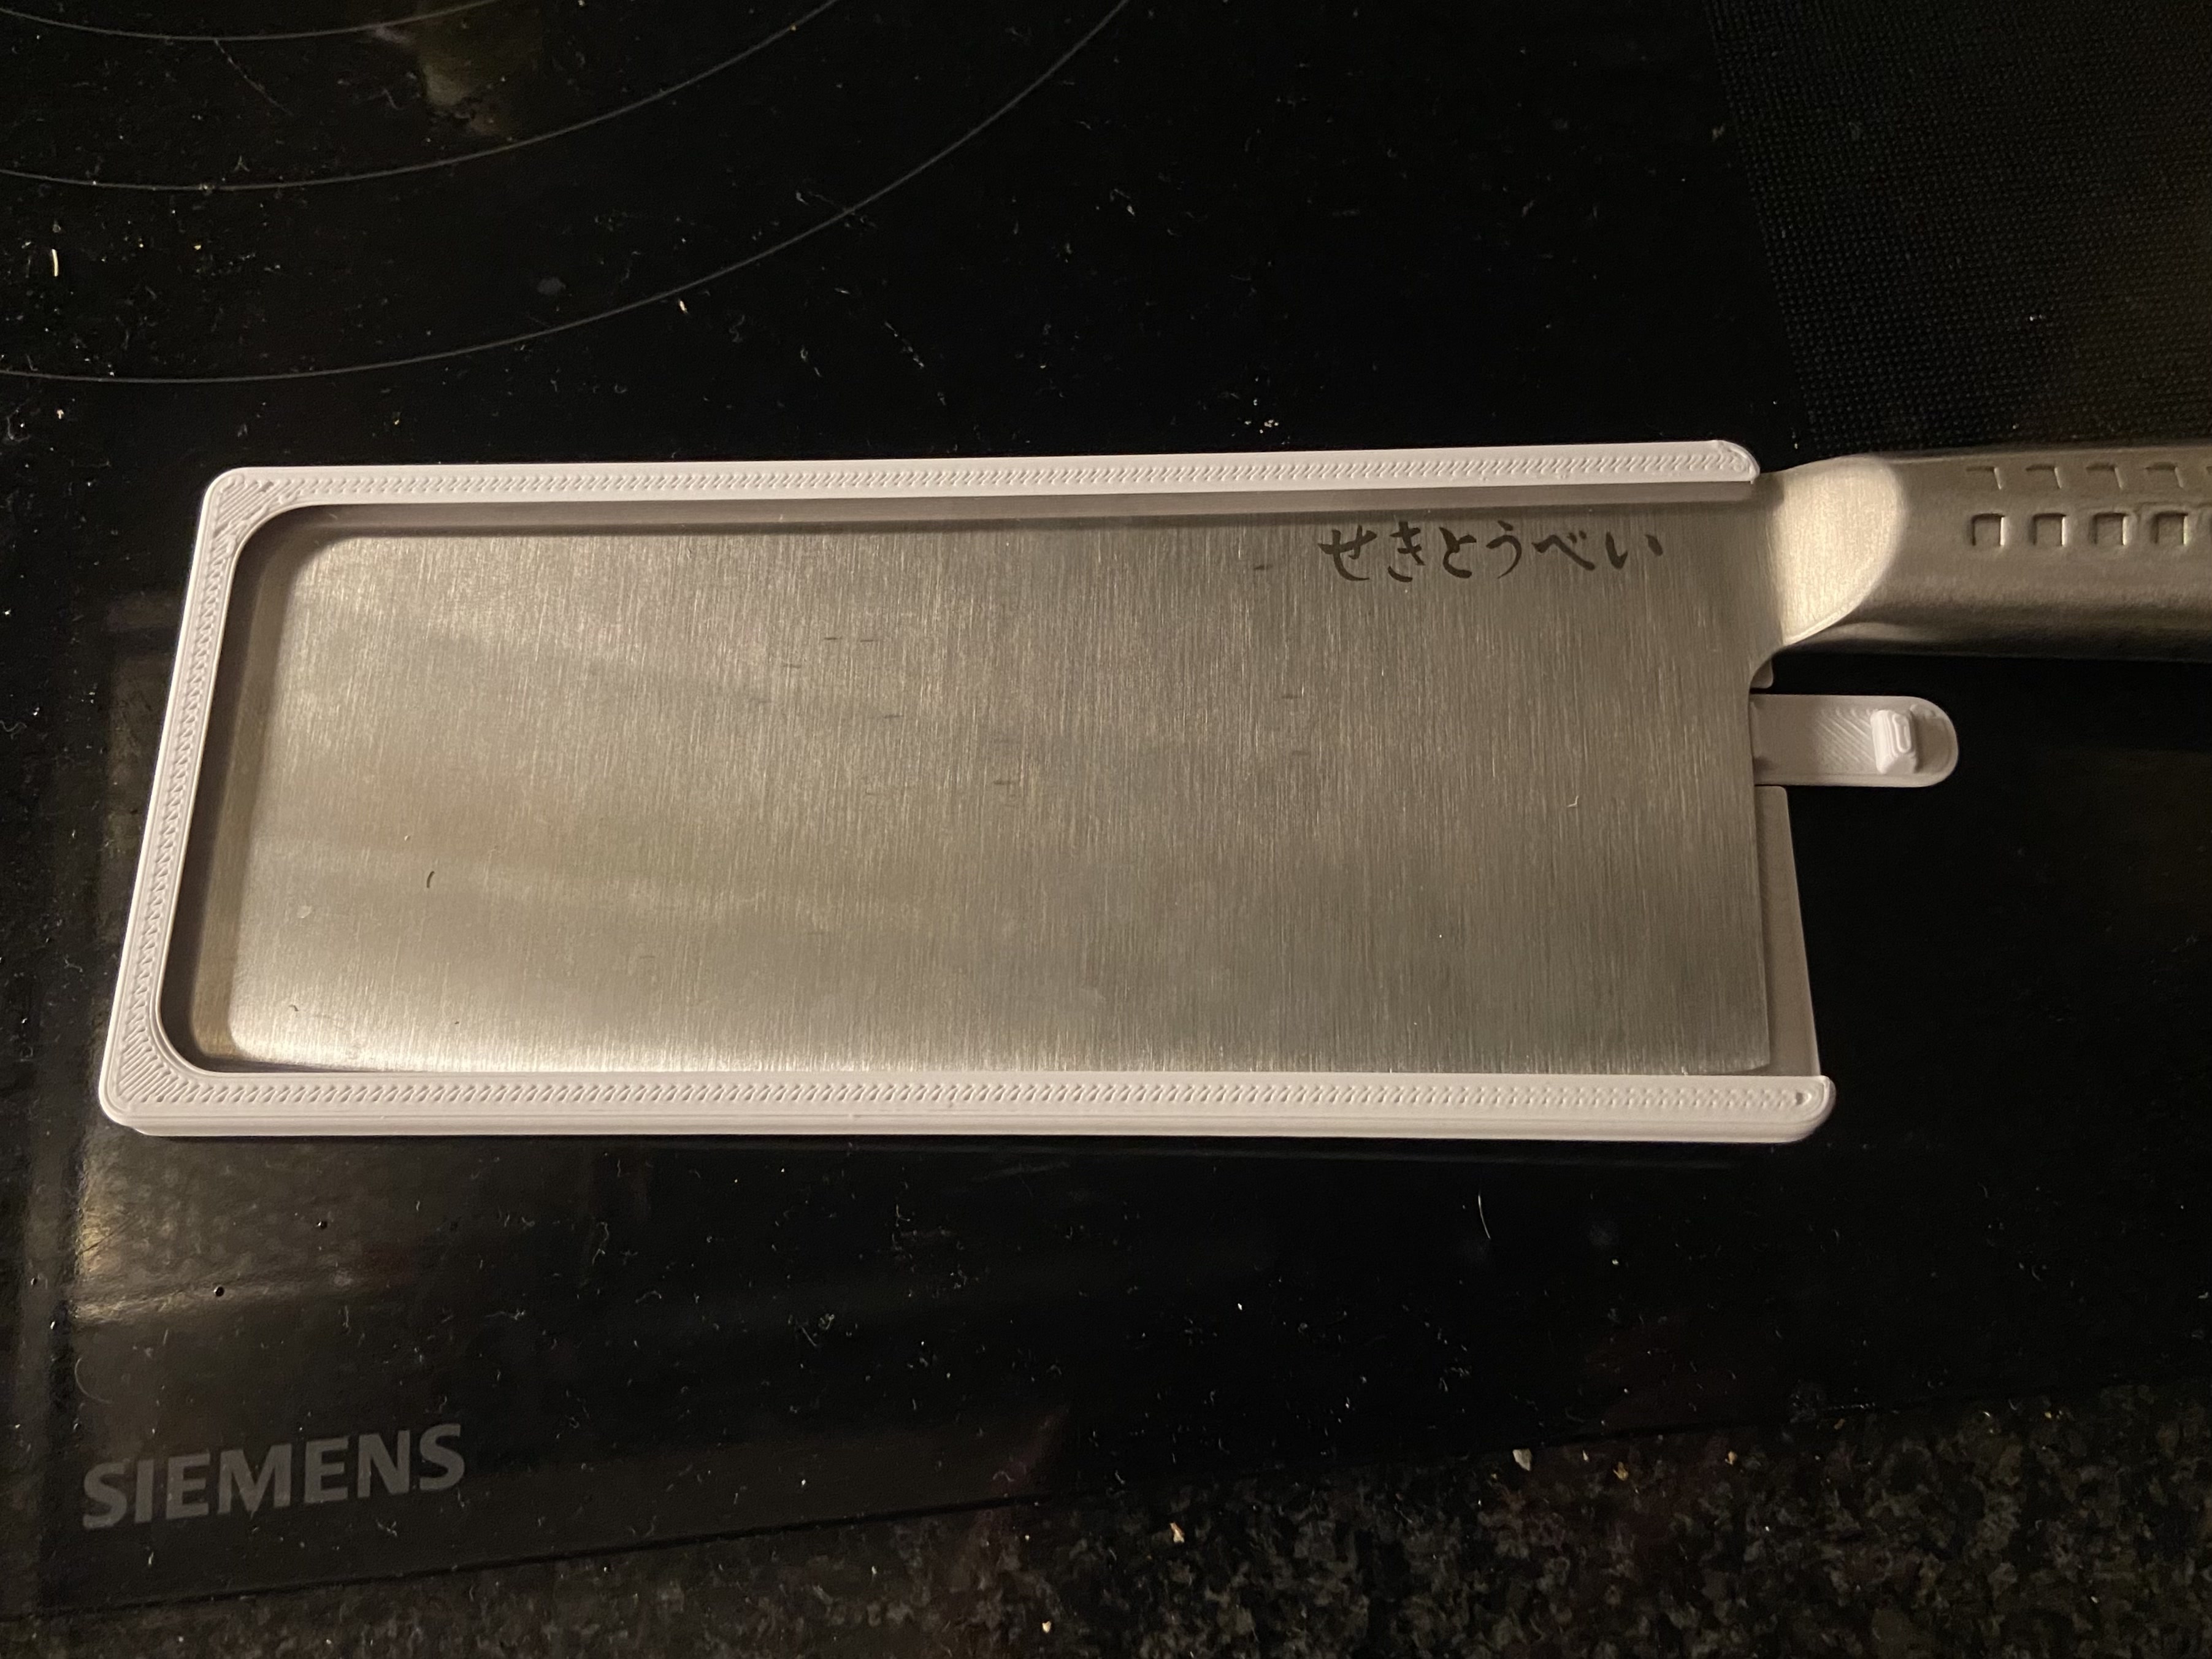 Sekitobei Cleaver knife cover